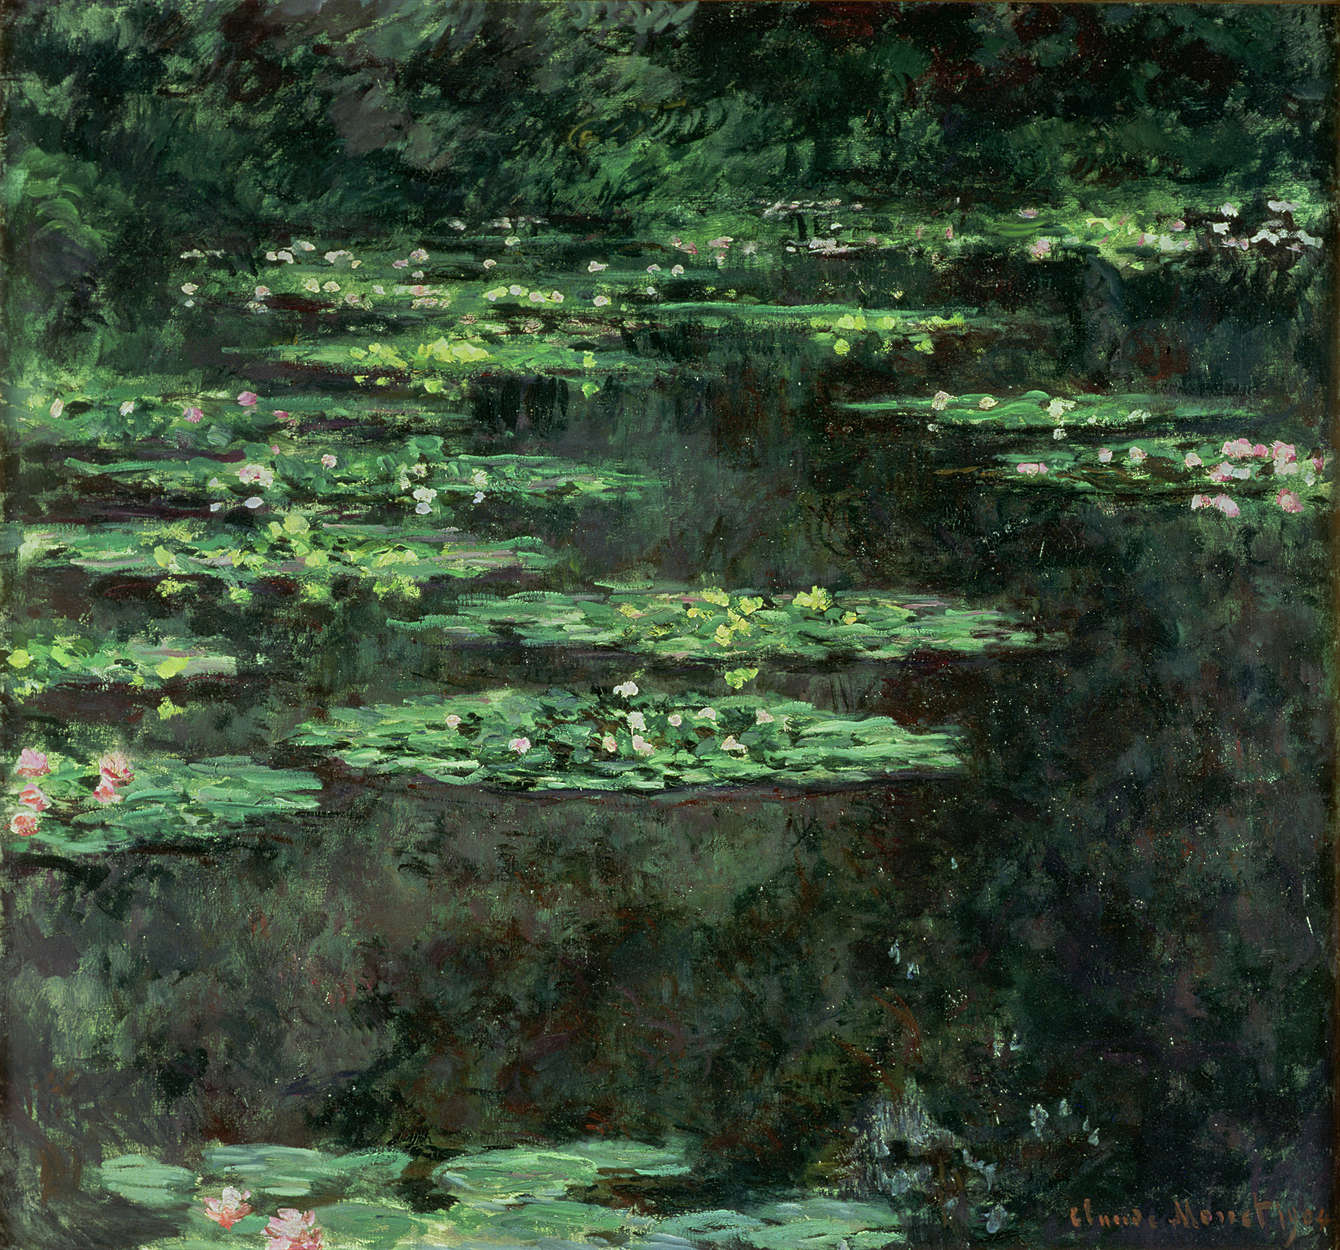             Ninfee" murale di Claude Monet
        